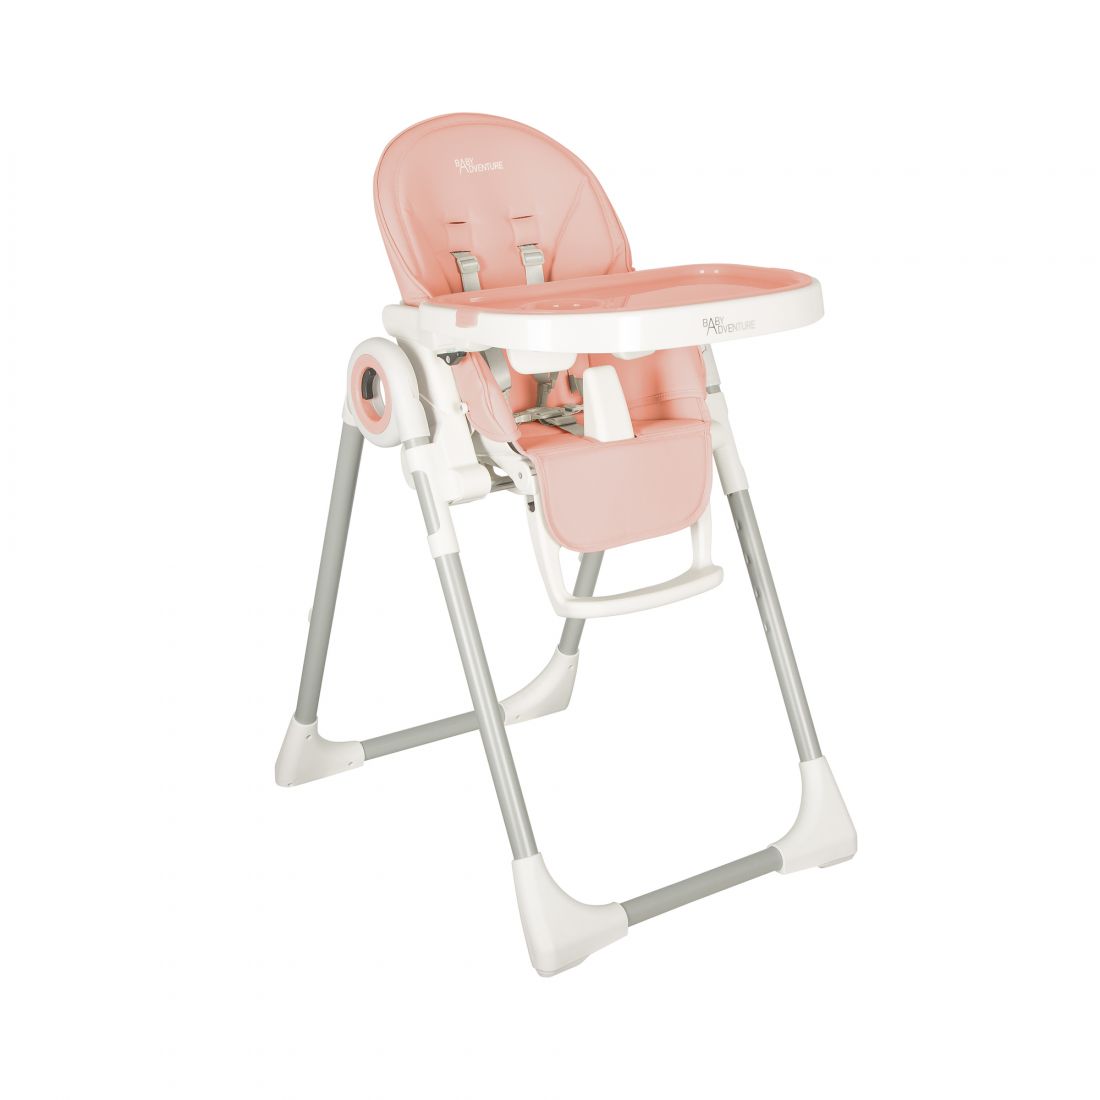 Kids Ηigh Chair VIVA 2 Powder Pink